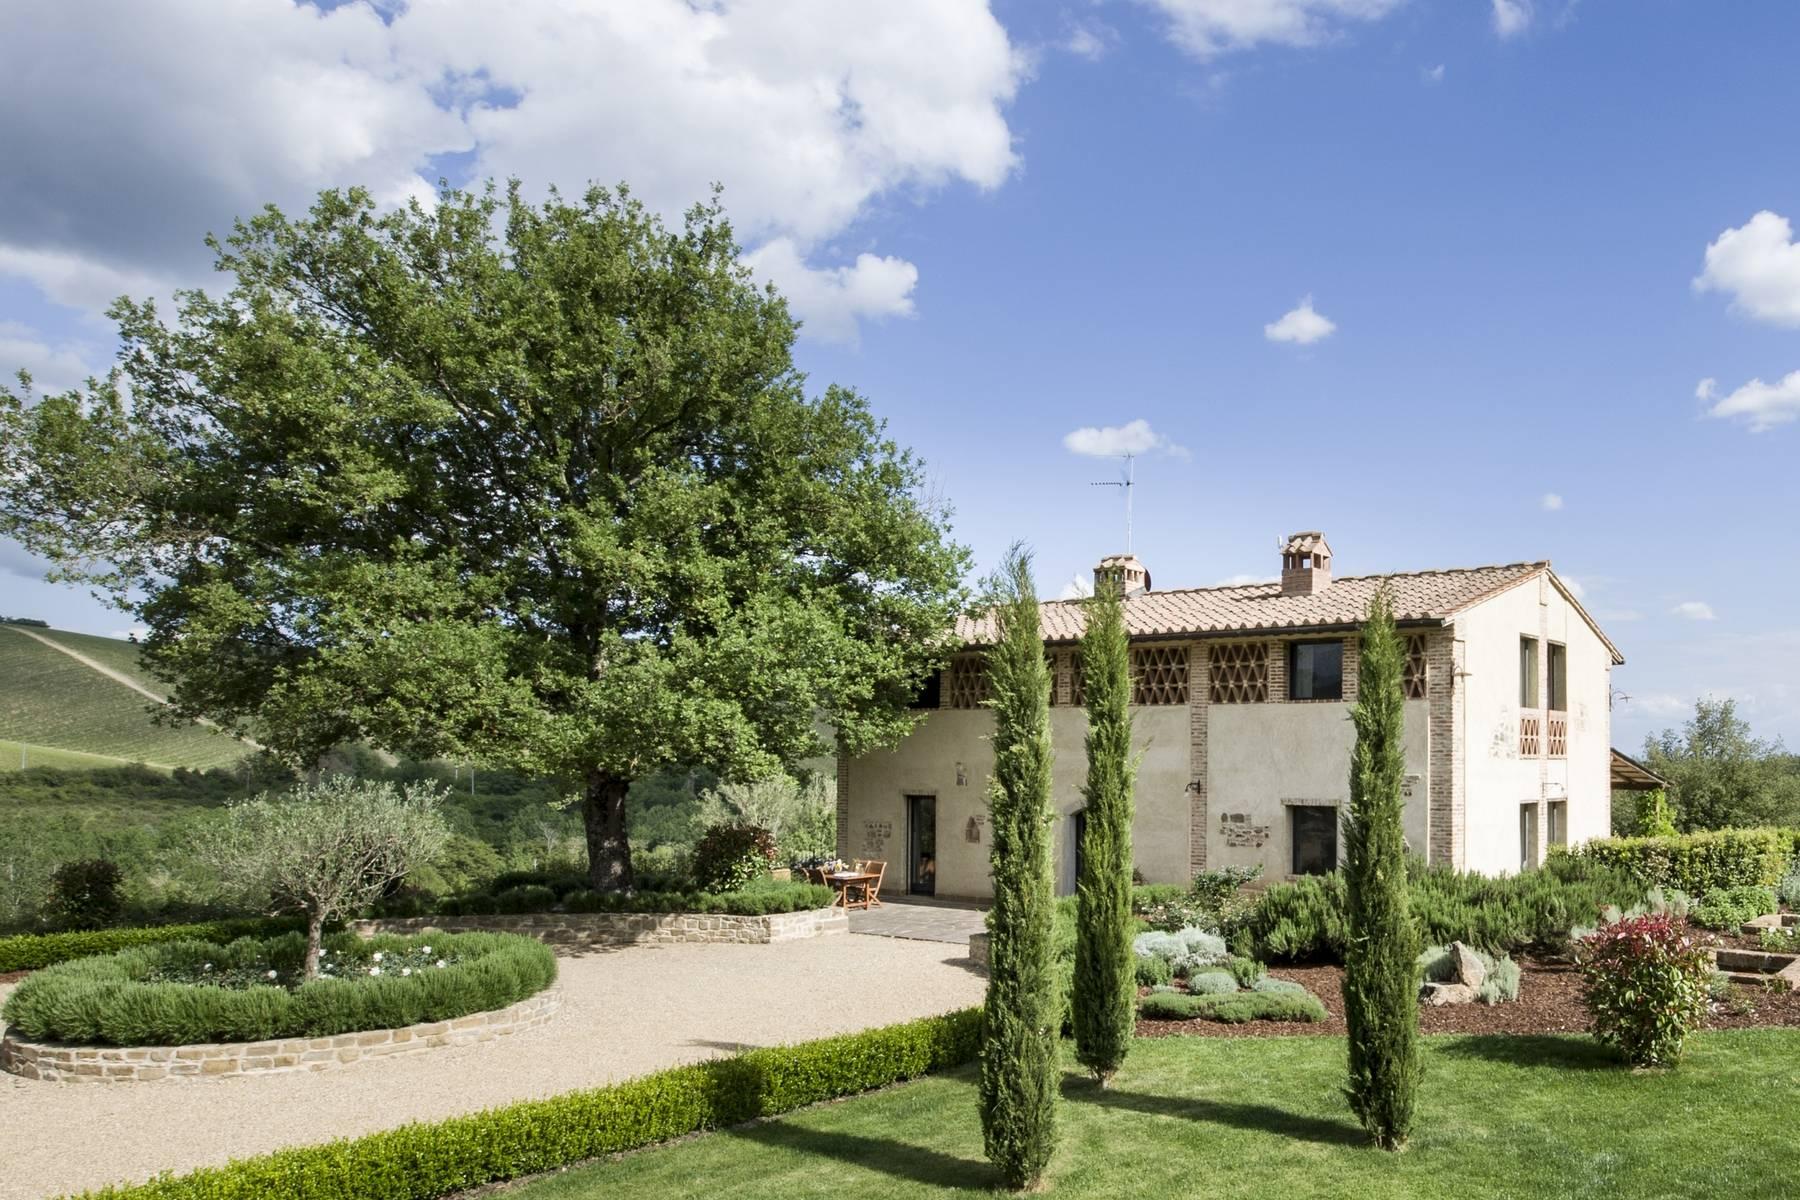 Villa Wisteria among the vineyards of the Chianti region - 1